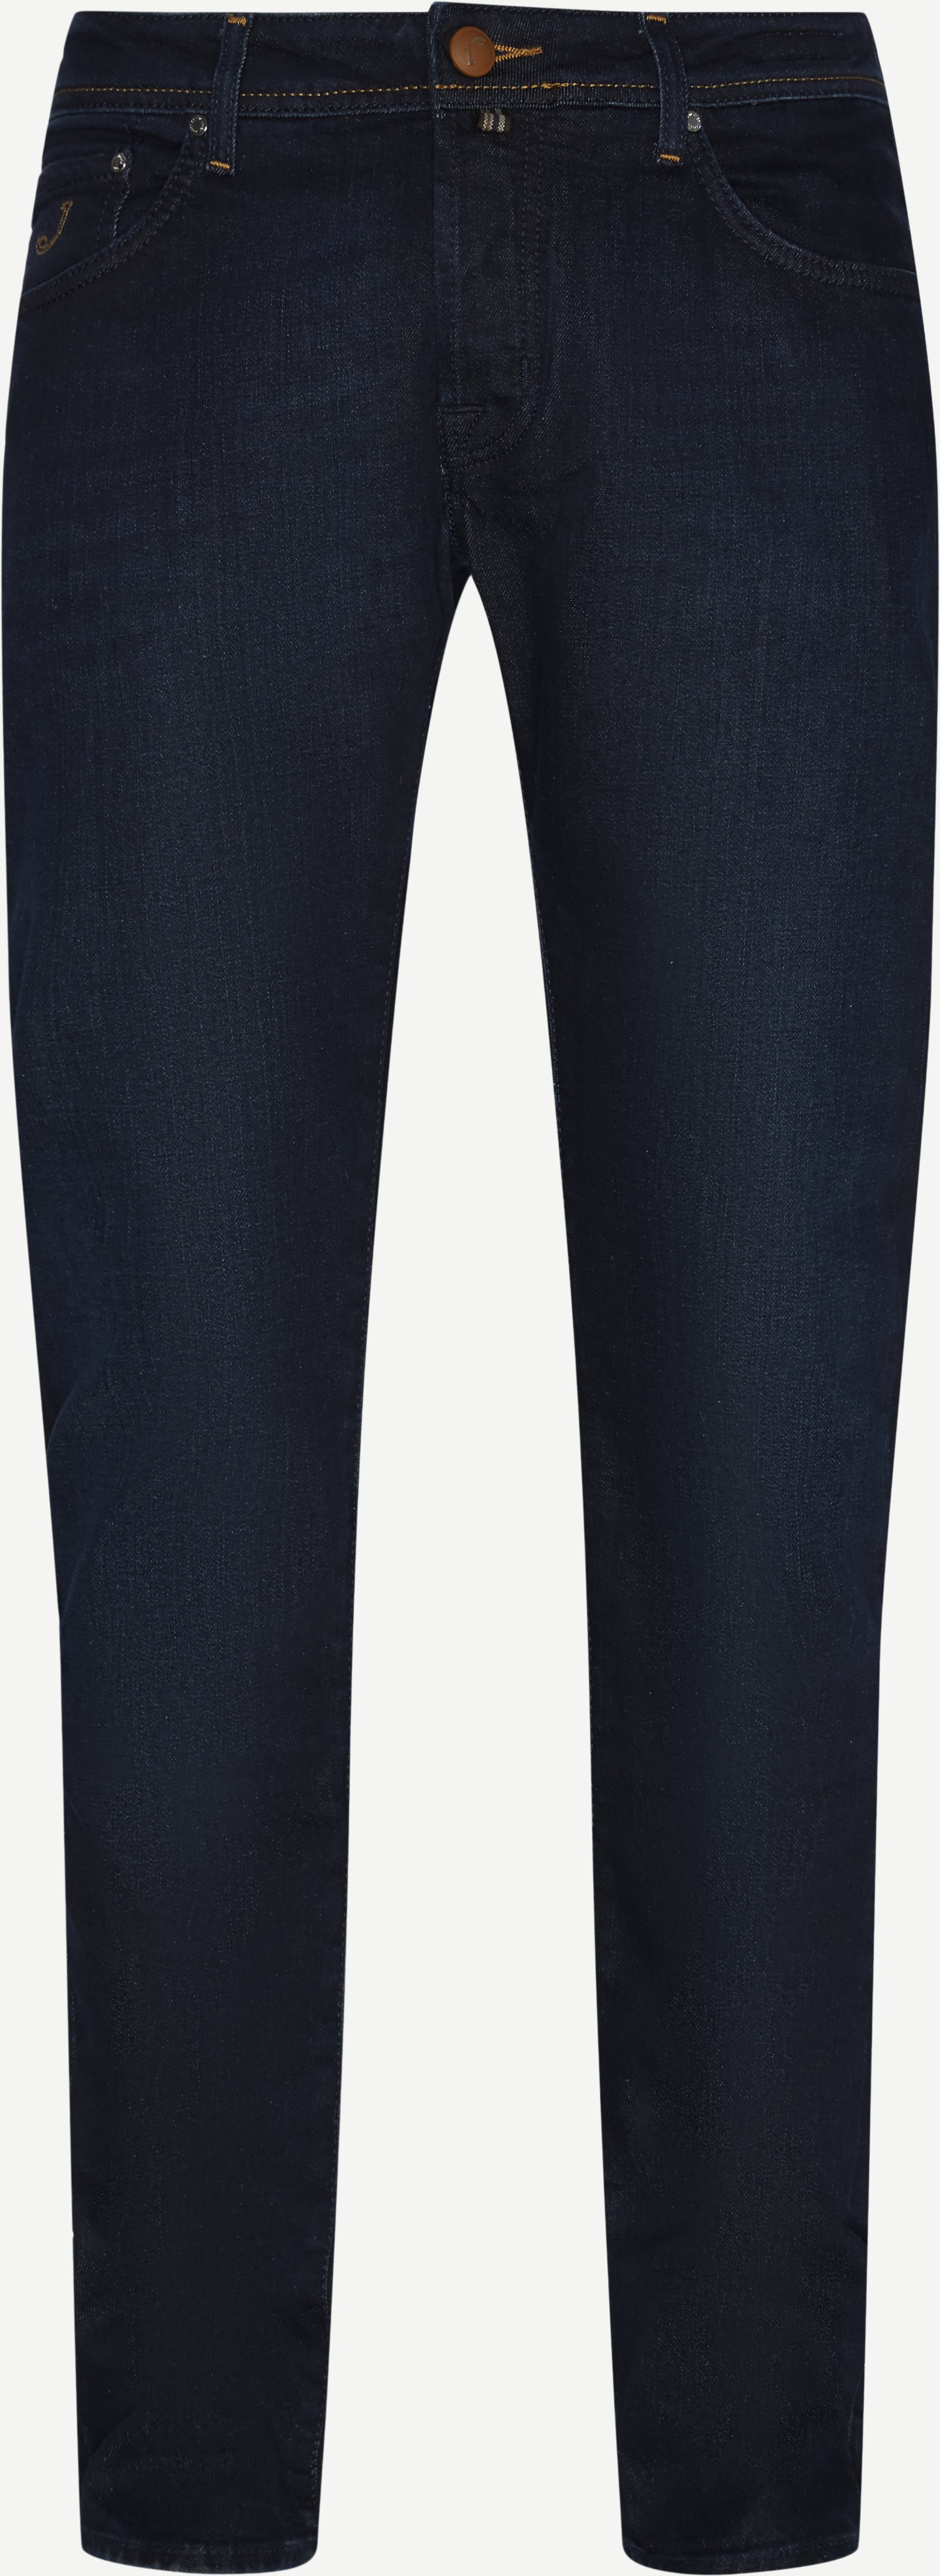 J622 Handgjorda skräddarsydda jeans - Jeans - Slim fit - Denim